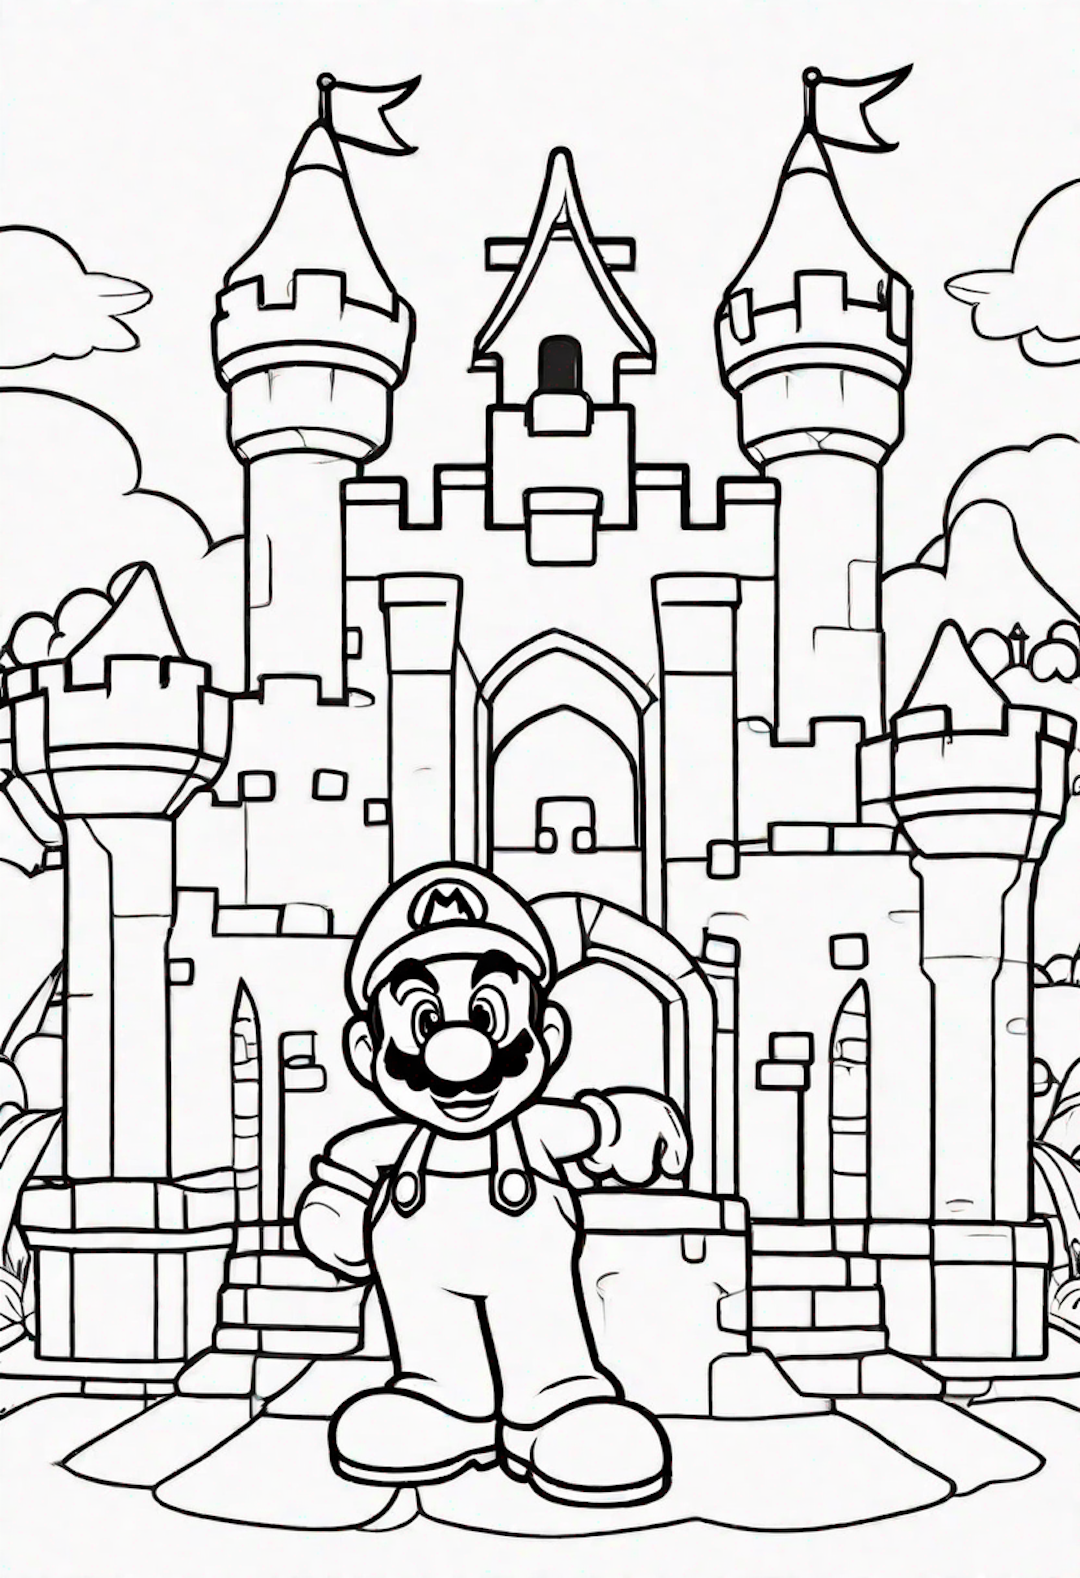 Mario at Peach’s Castle